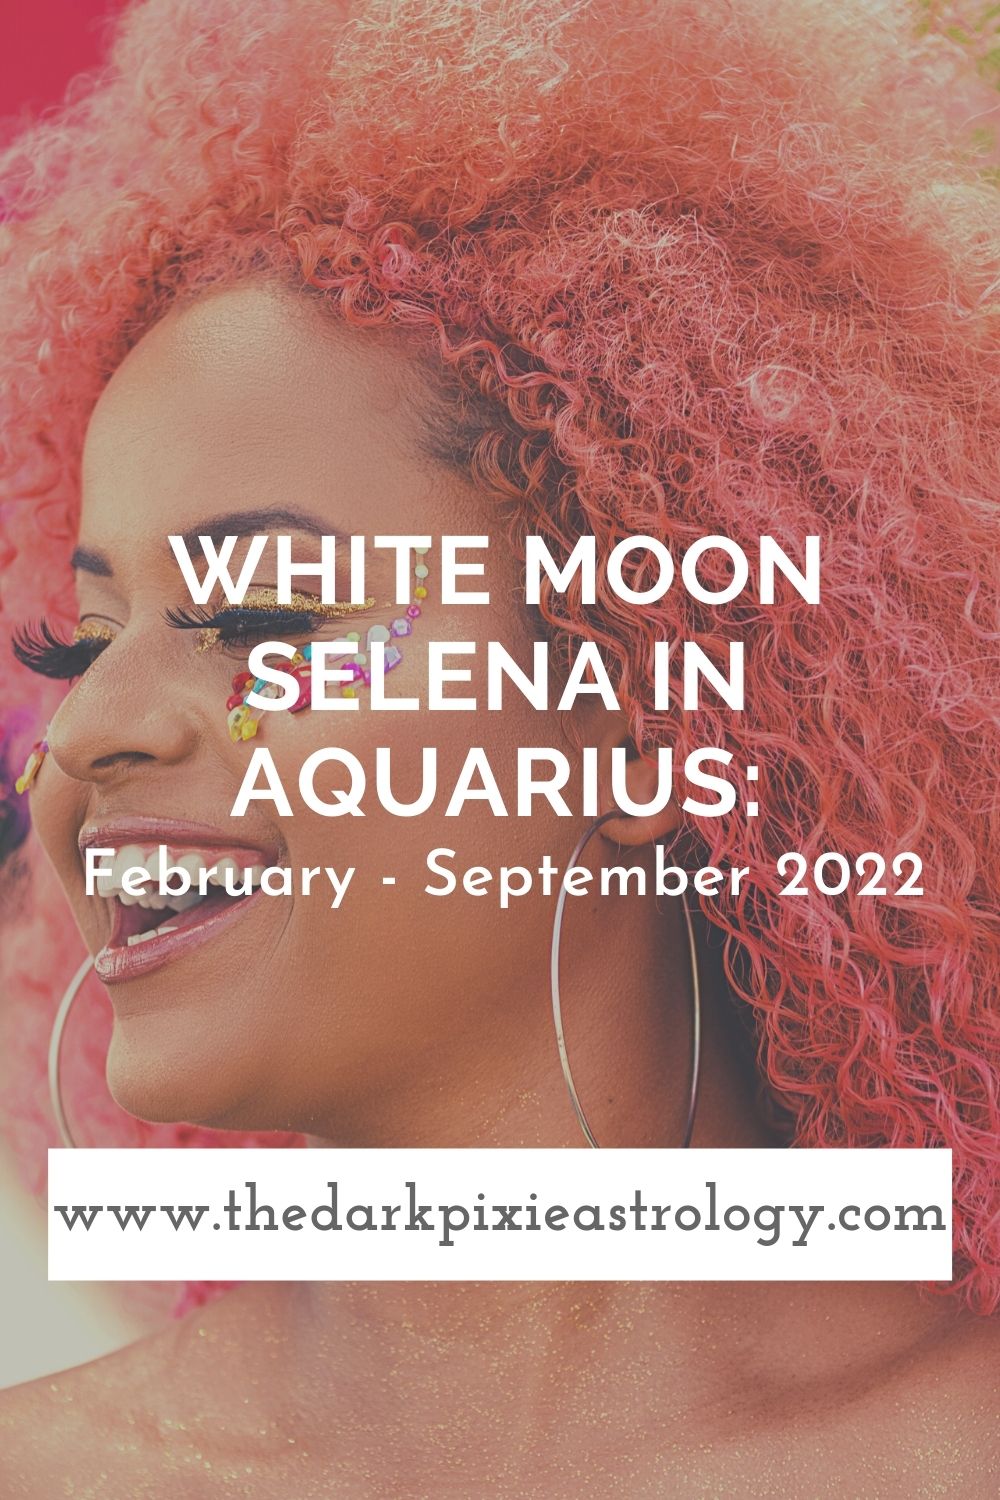 White Moon Selena in Aquarius: February - September 2022 - The Dark Pixie Astrology